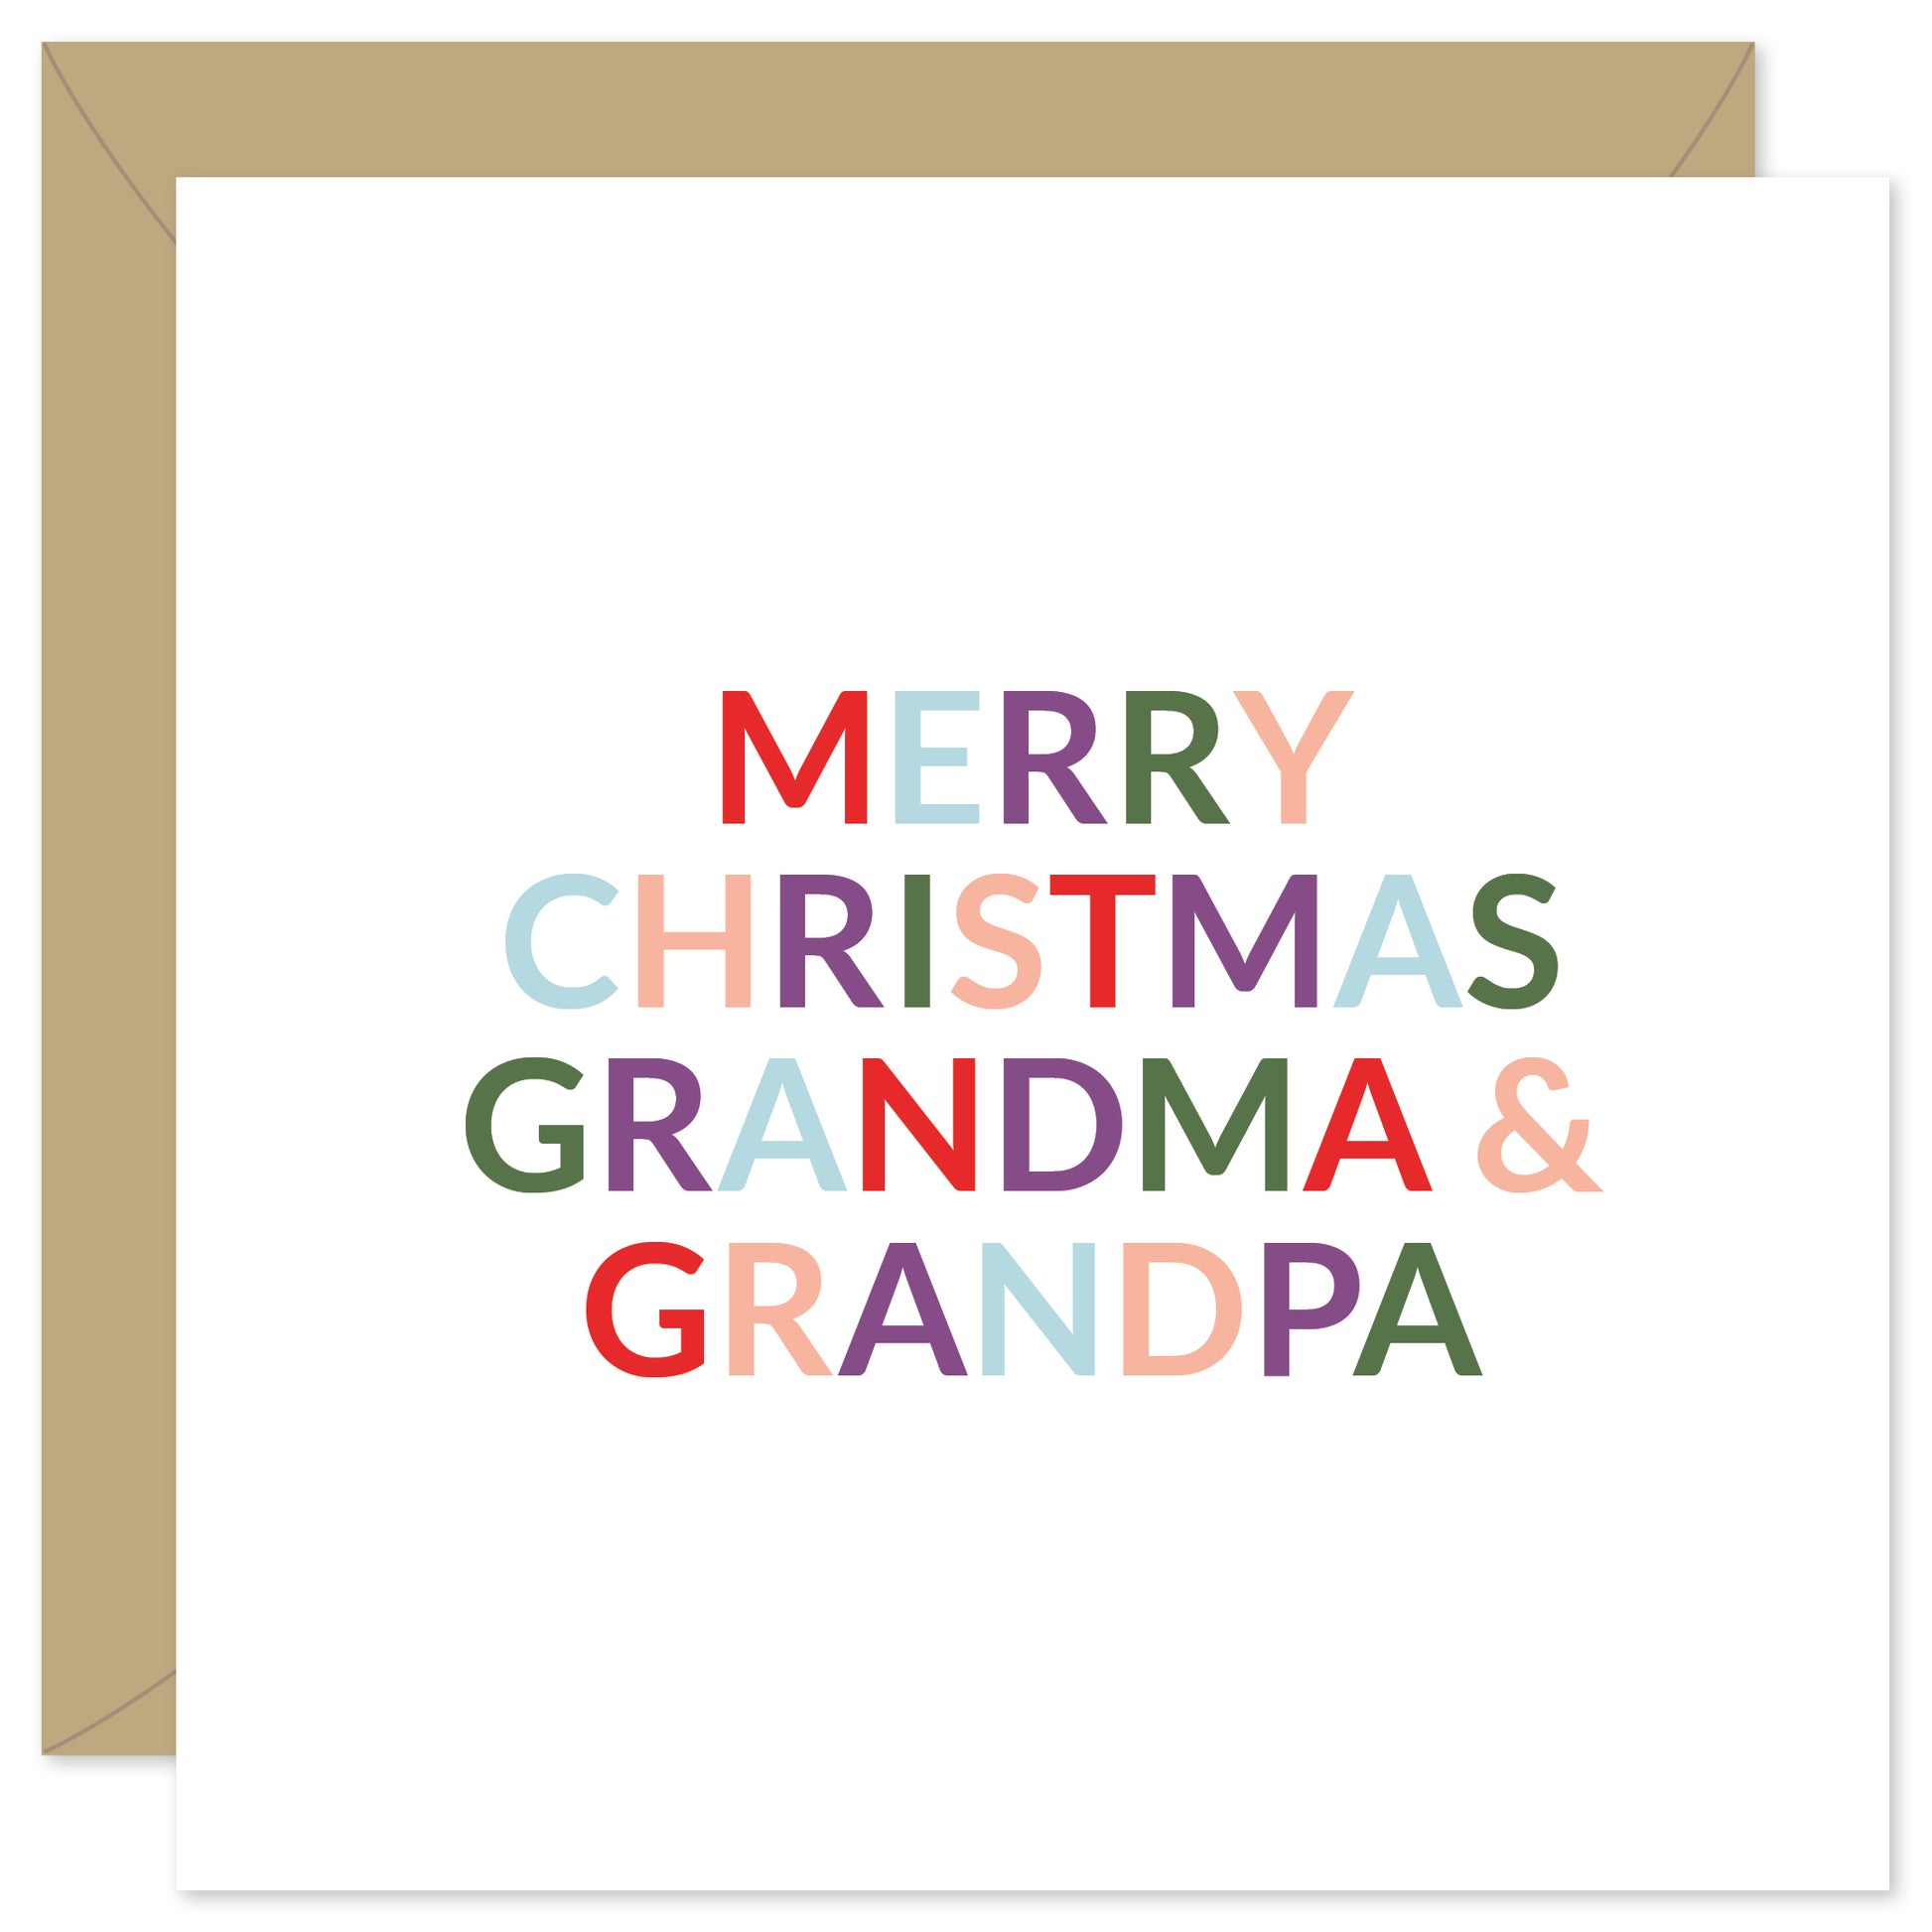 Grandma and grandpa Christmas card from Purple Tree Designs